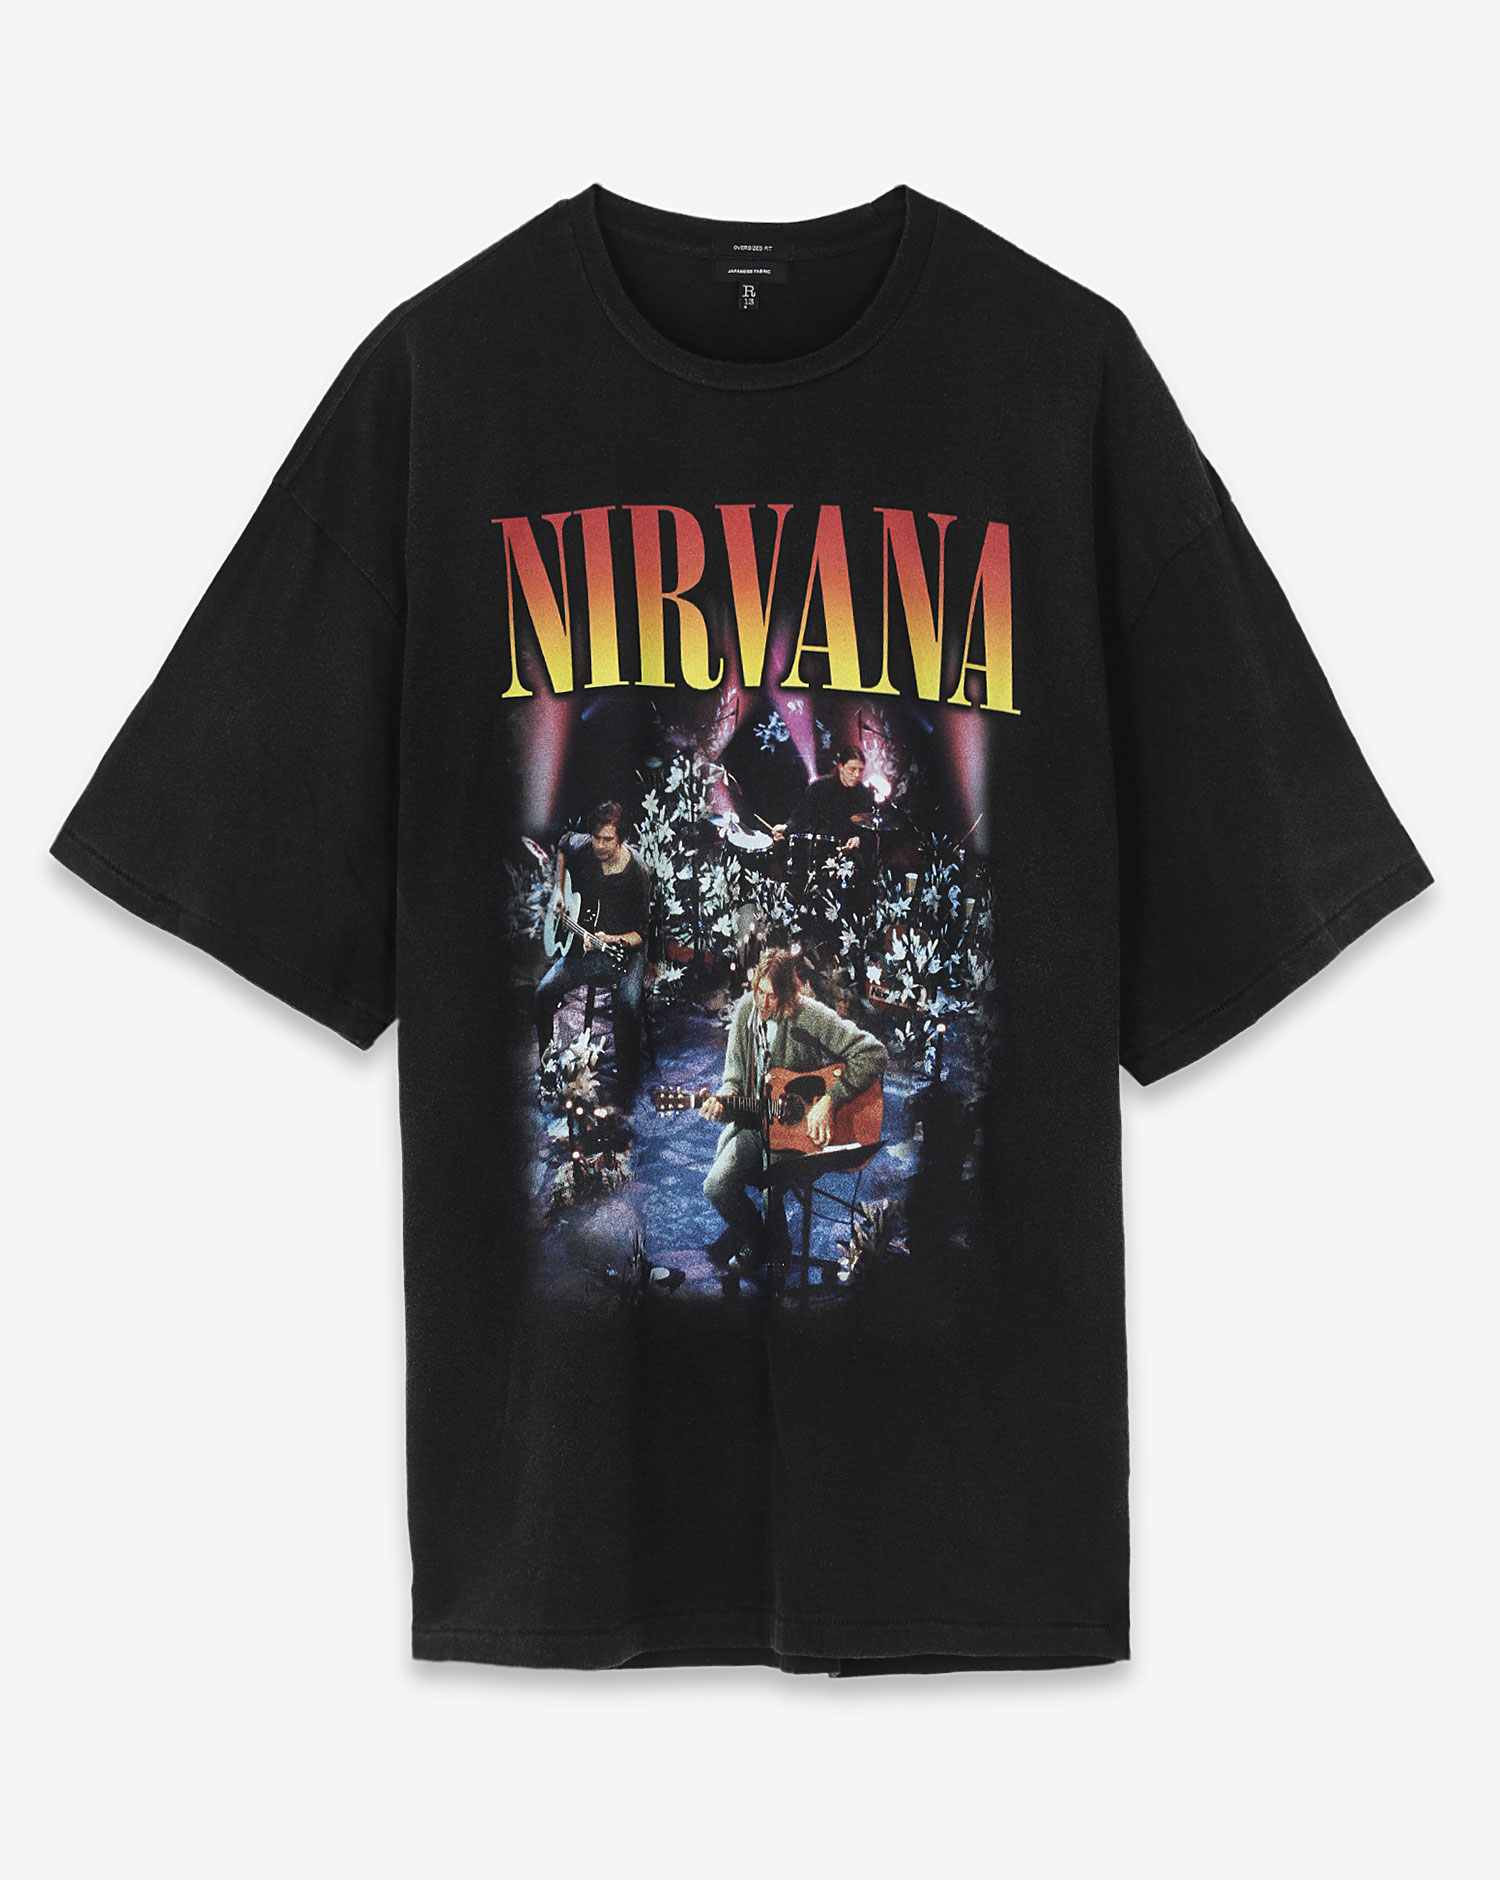 Tee-Shirt Nirvana Concert Oversized R13 Denim